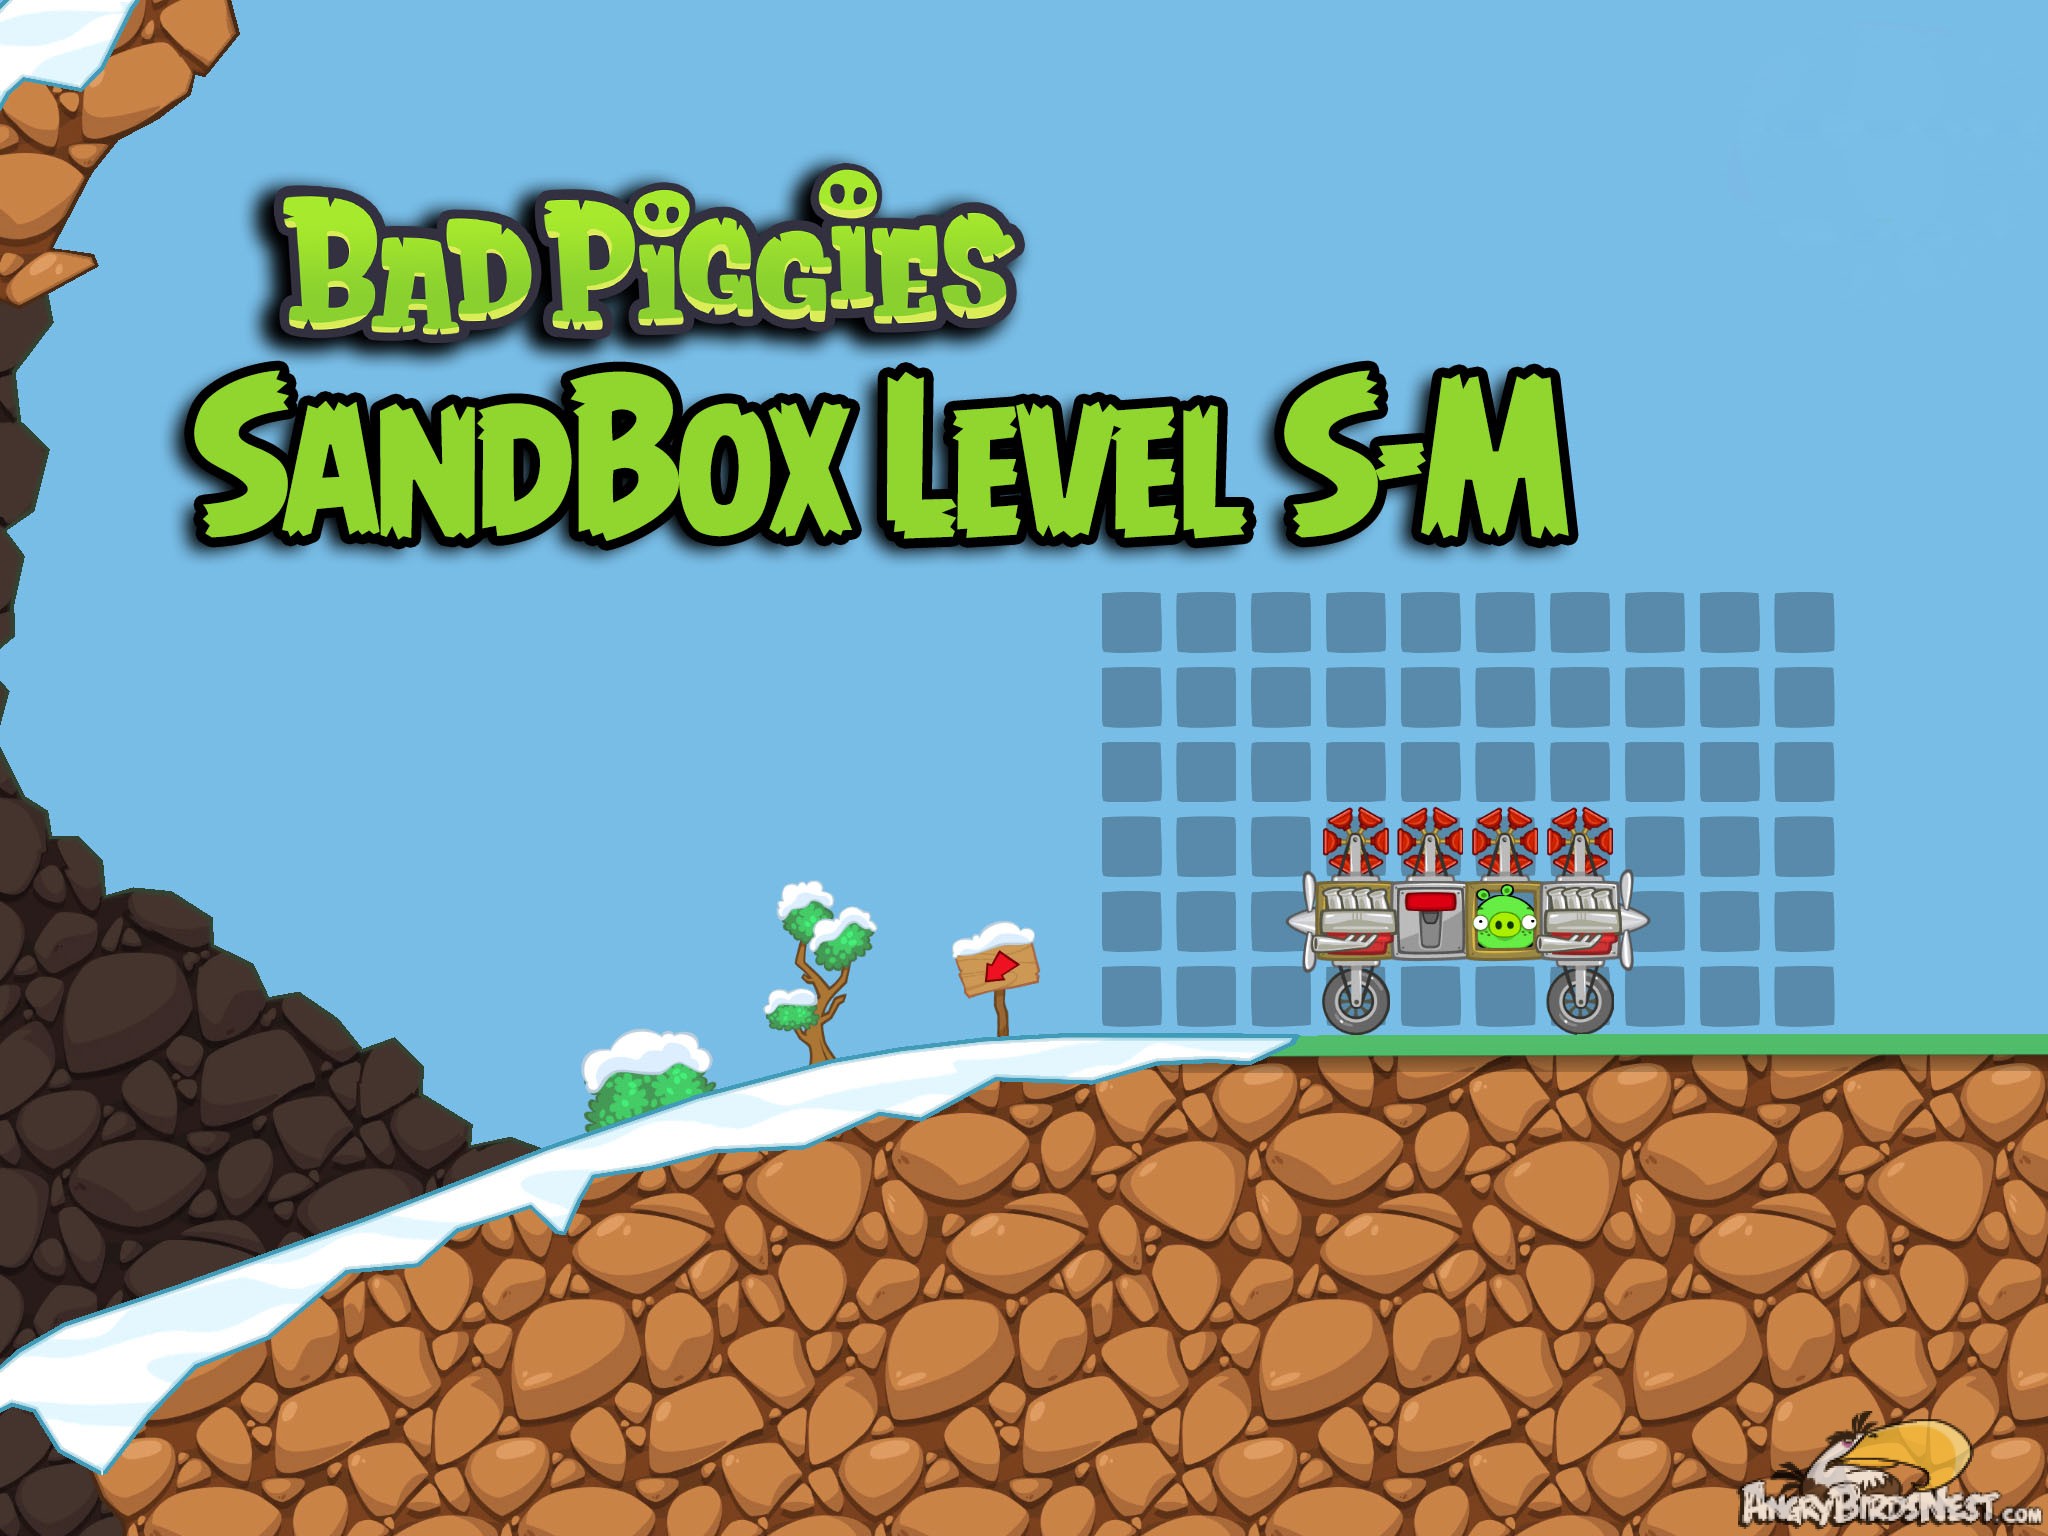 Bad Piggies Sandbox S-M